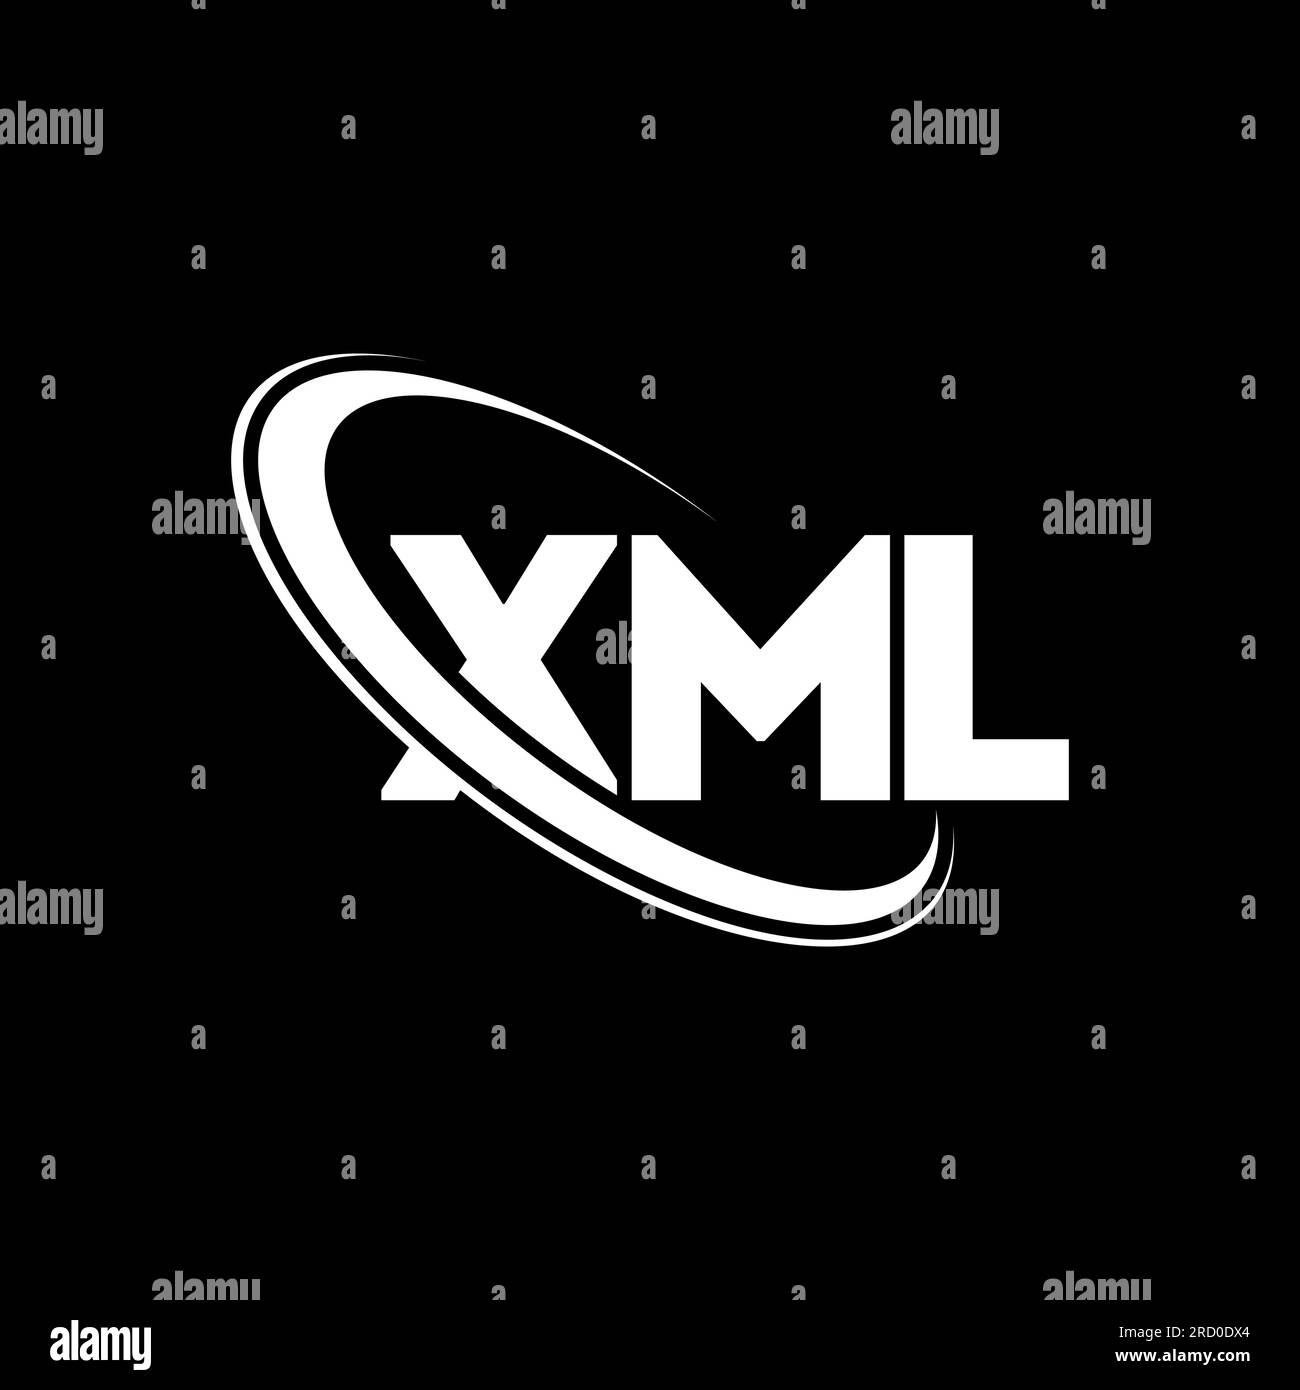 XML logo. XML letter. XML letter logo design. Initials XML logo linked with circle and uppercase monogram logo. XML typography for technology, busines Stock Vector